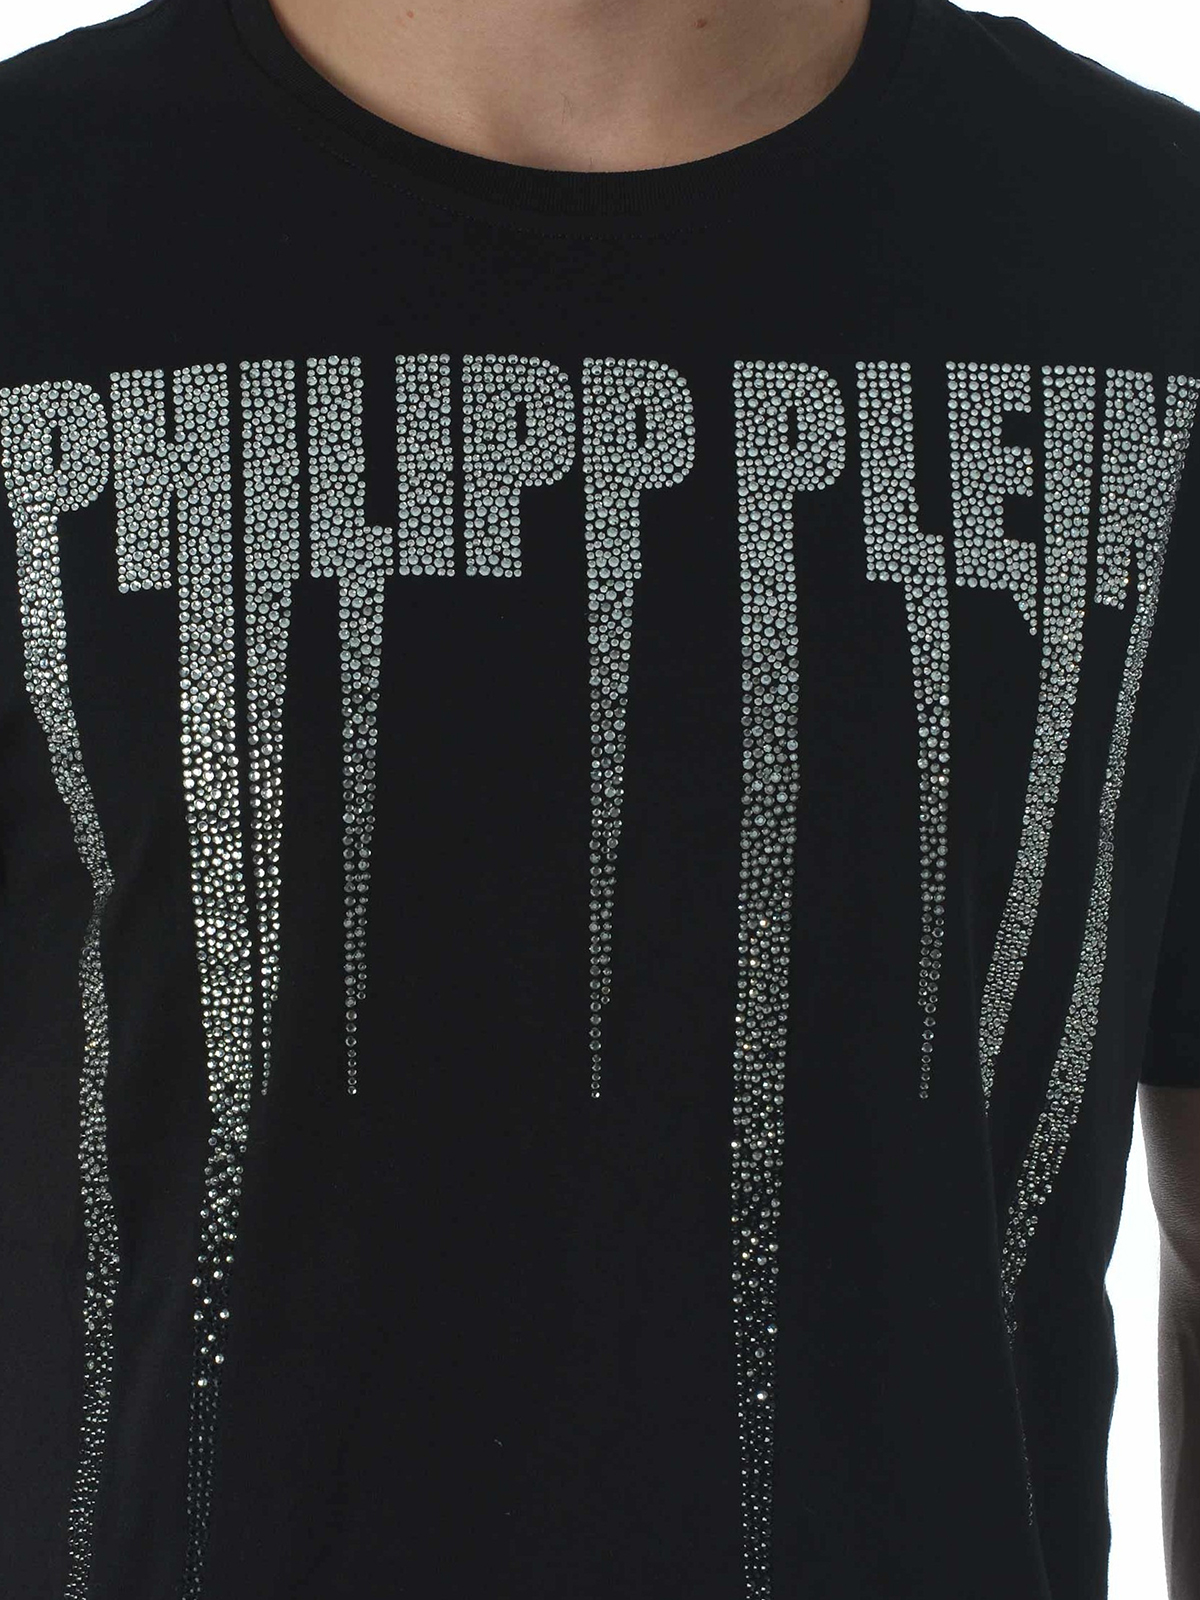 philipp plein crystal t shirt